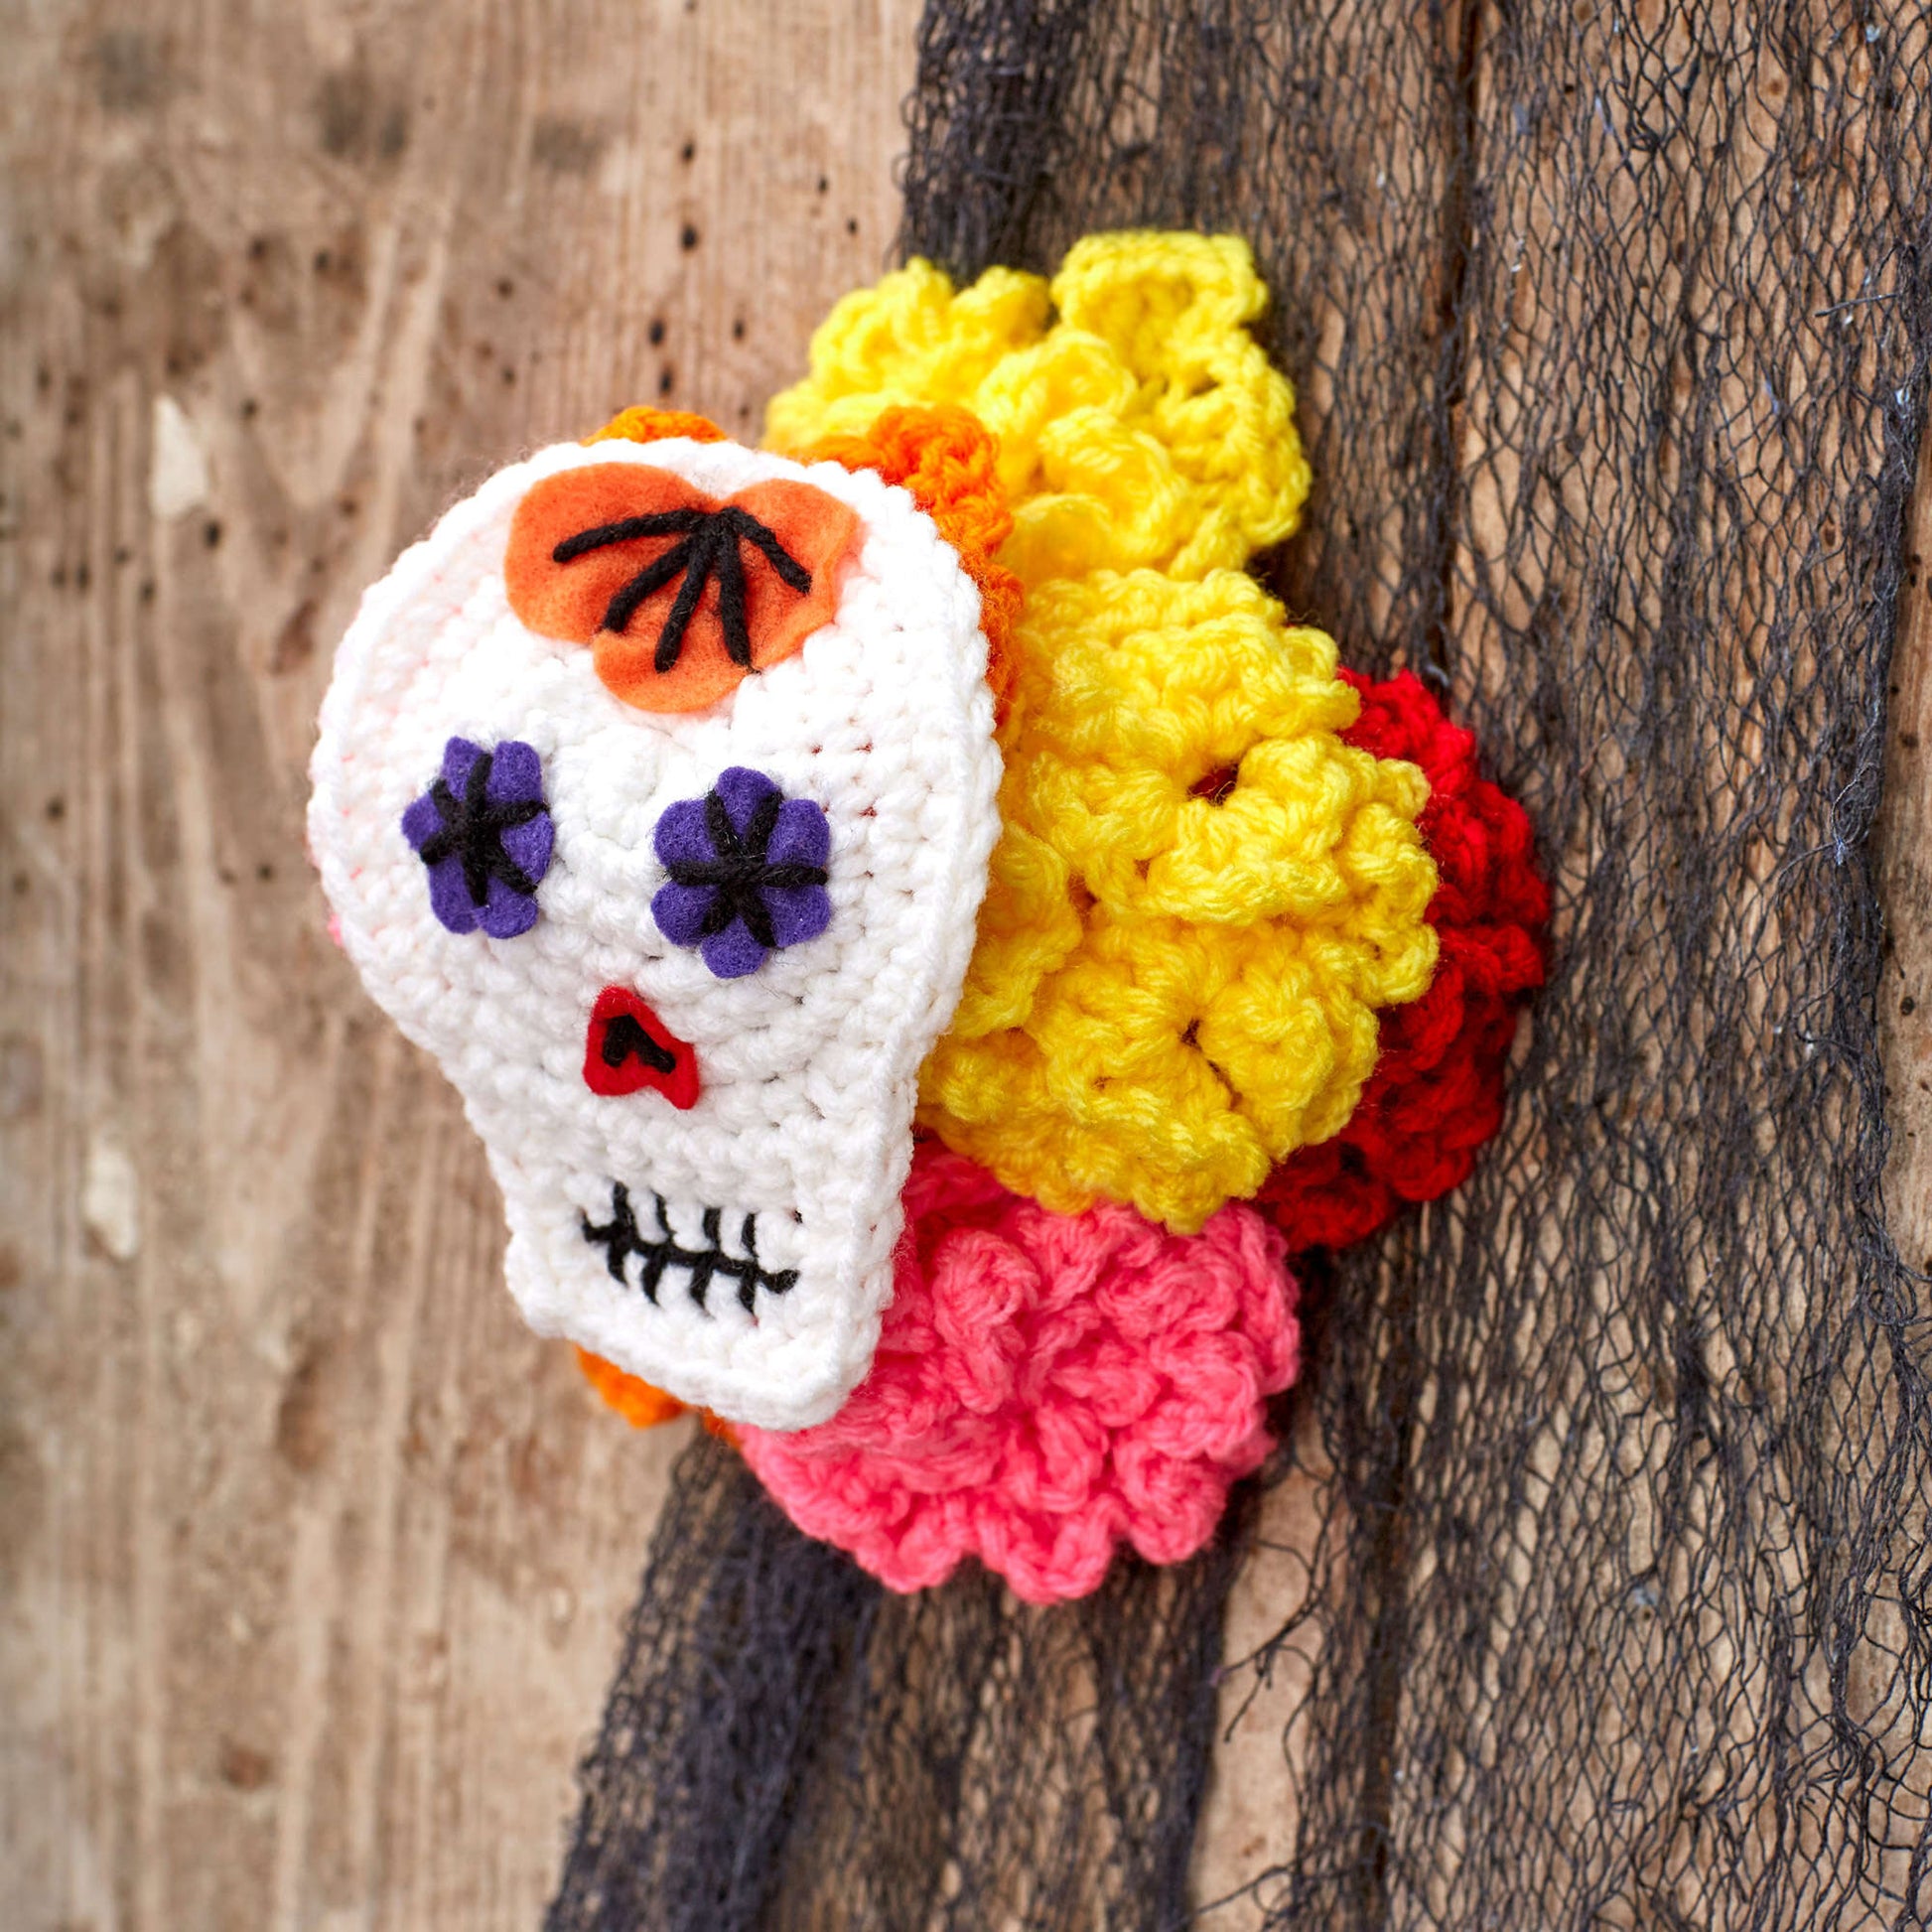 Free Red Heart Sugar Skull Child's Headpiece Crochet Pattern